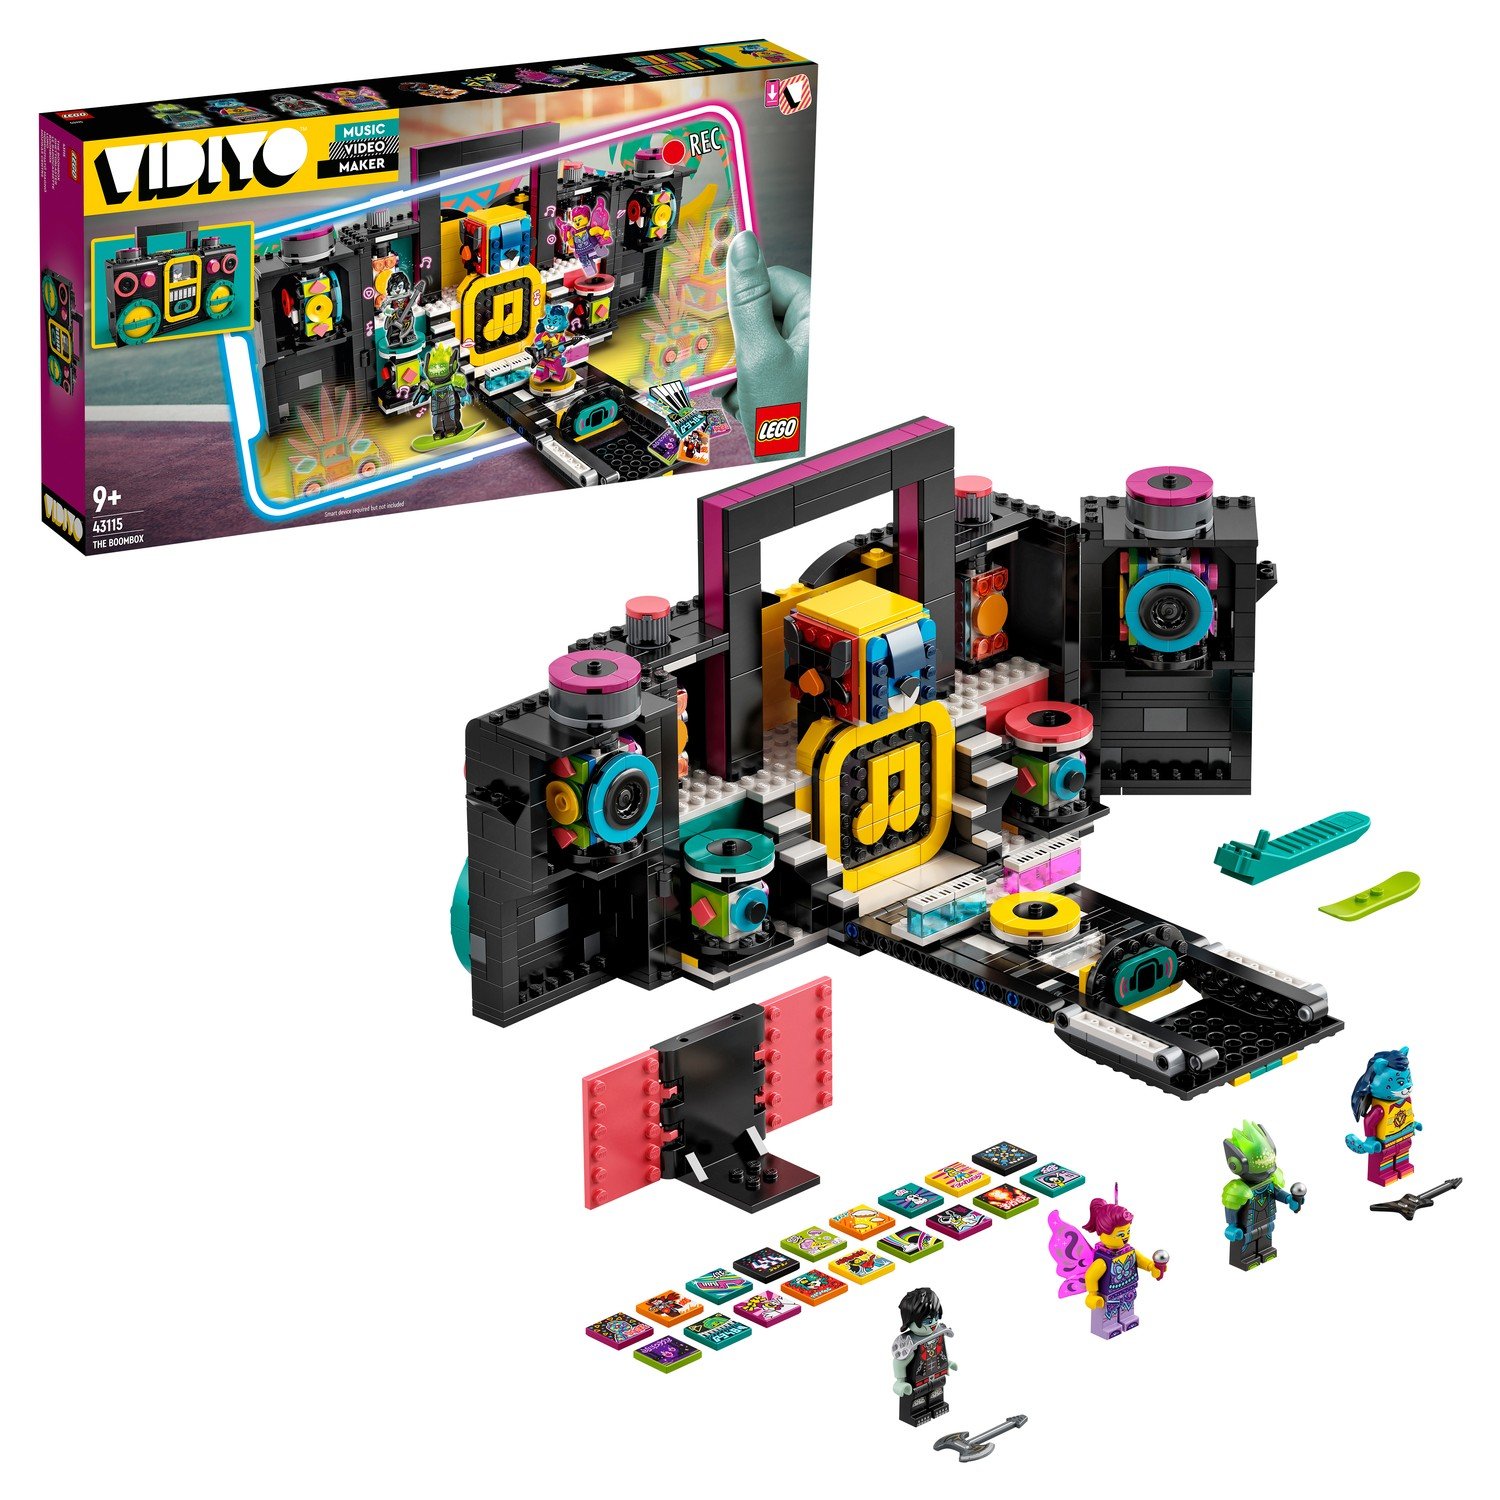 Набор для творчества LEGO VIDIYO 43115 The Boombox (Бумбокс)